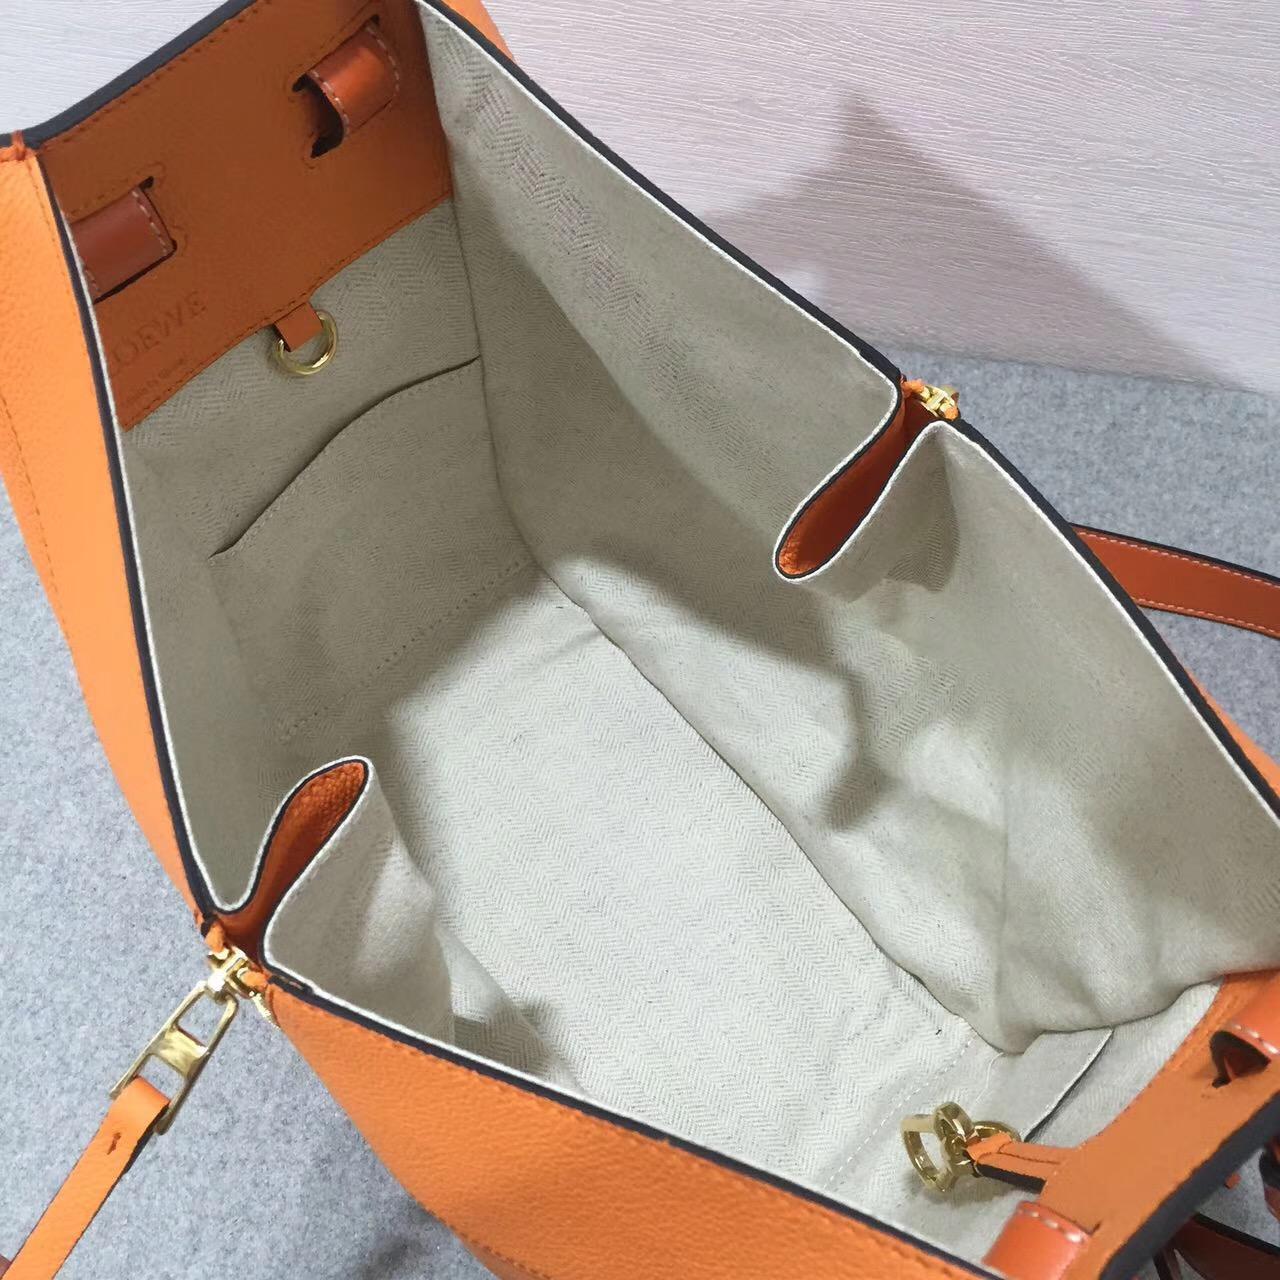 Loewe羅意威 Hammock Small Bag Apricot/Orange 吊床包